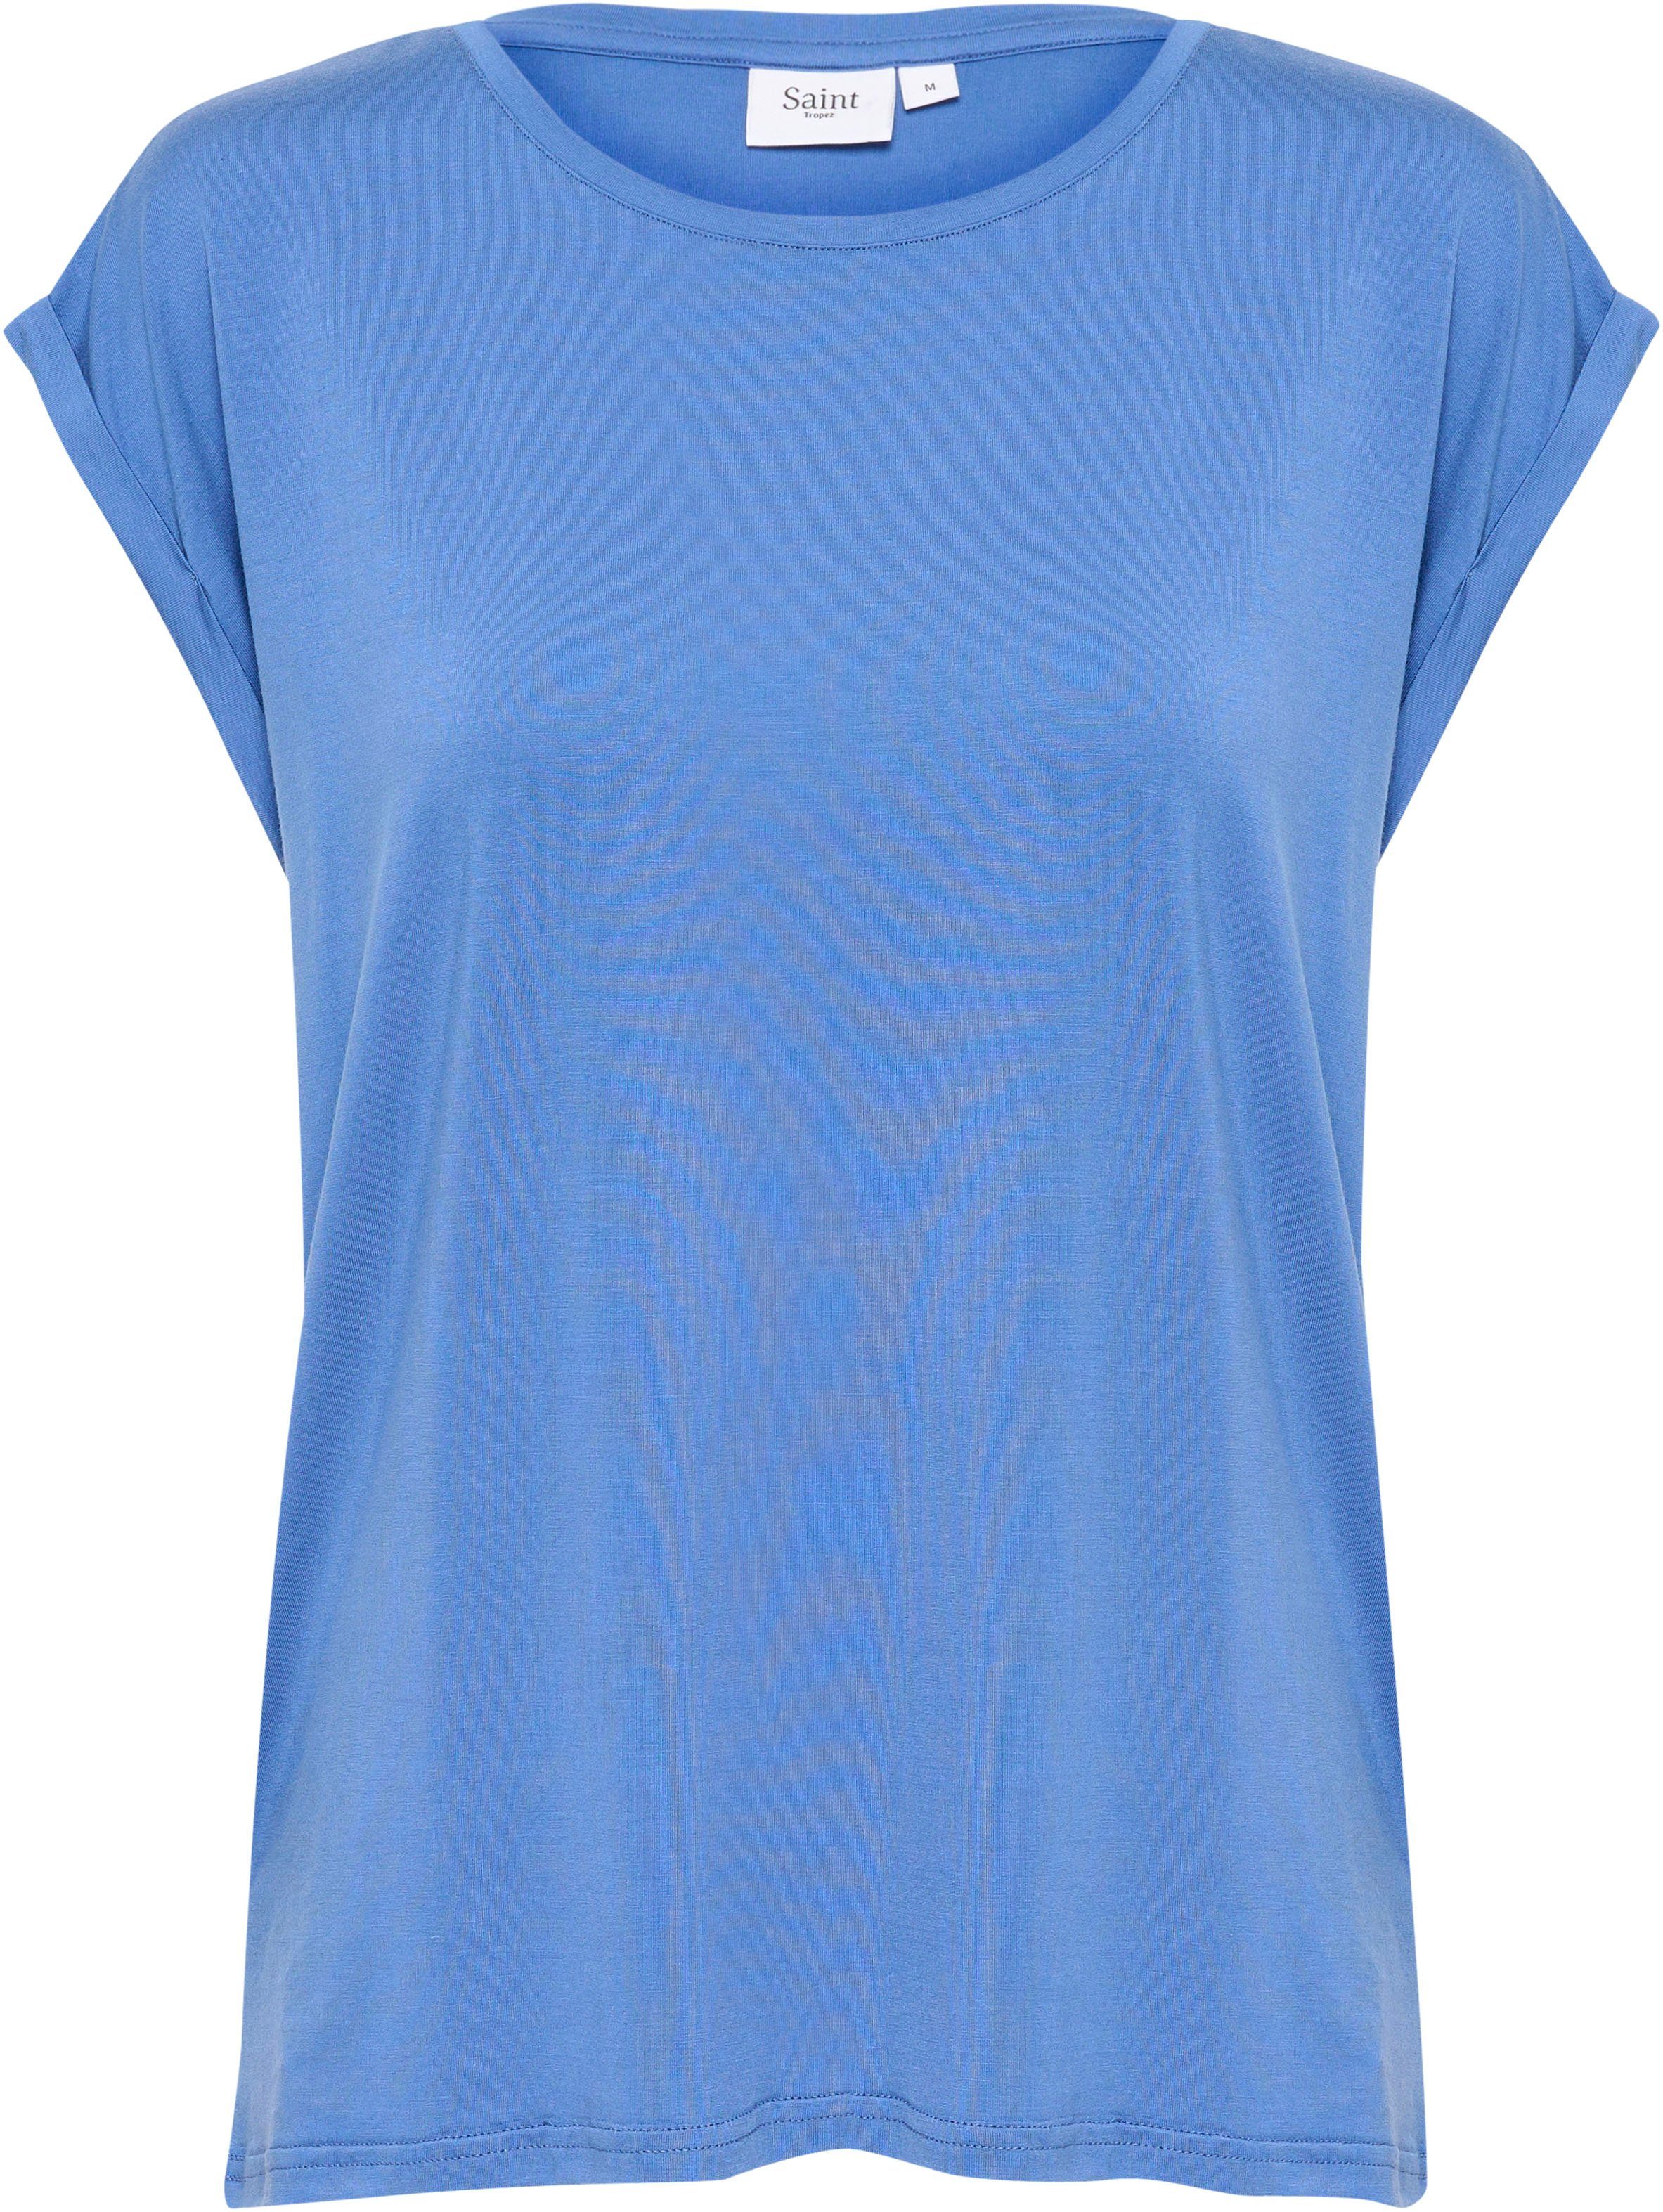 AdeliaSZ Saint Kurzarmshirt Dutch U1520, T-Shirt Tropez Blue